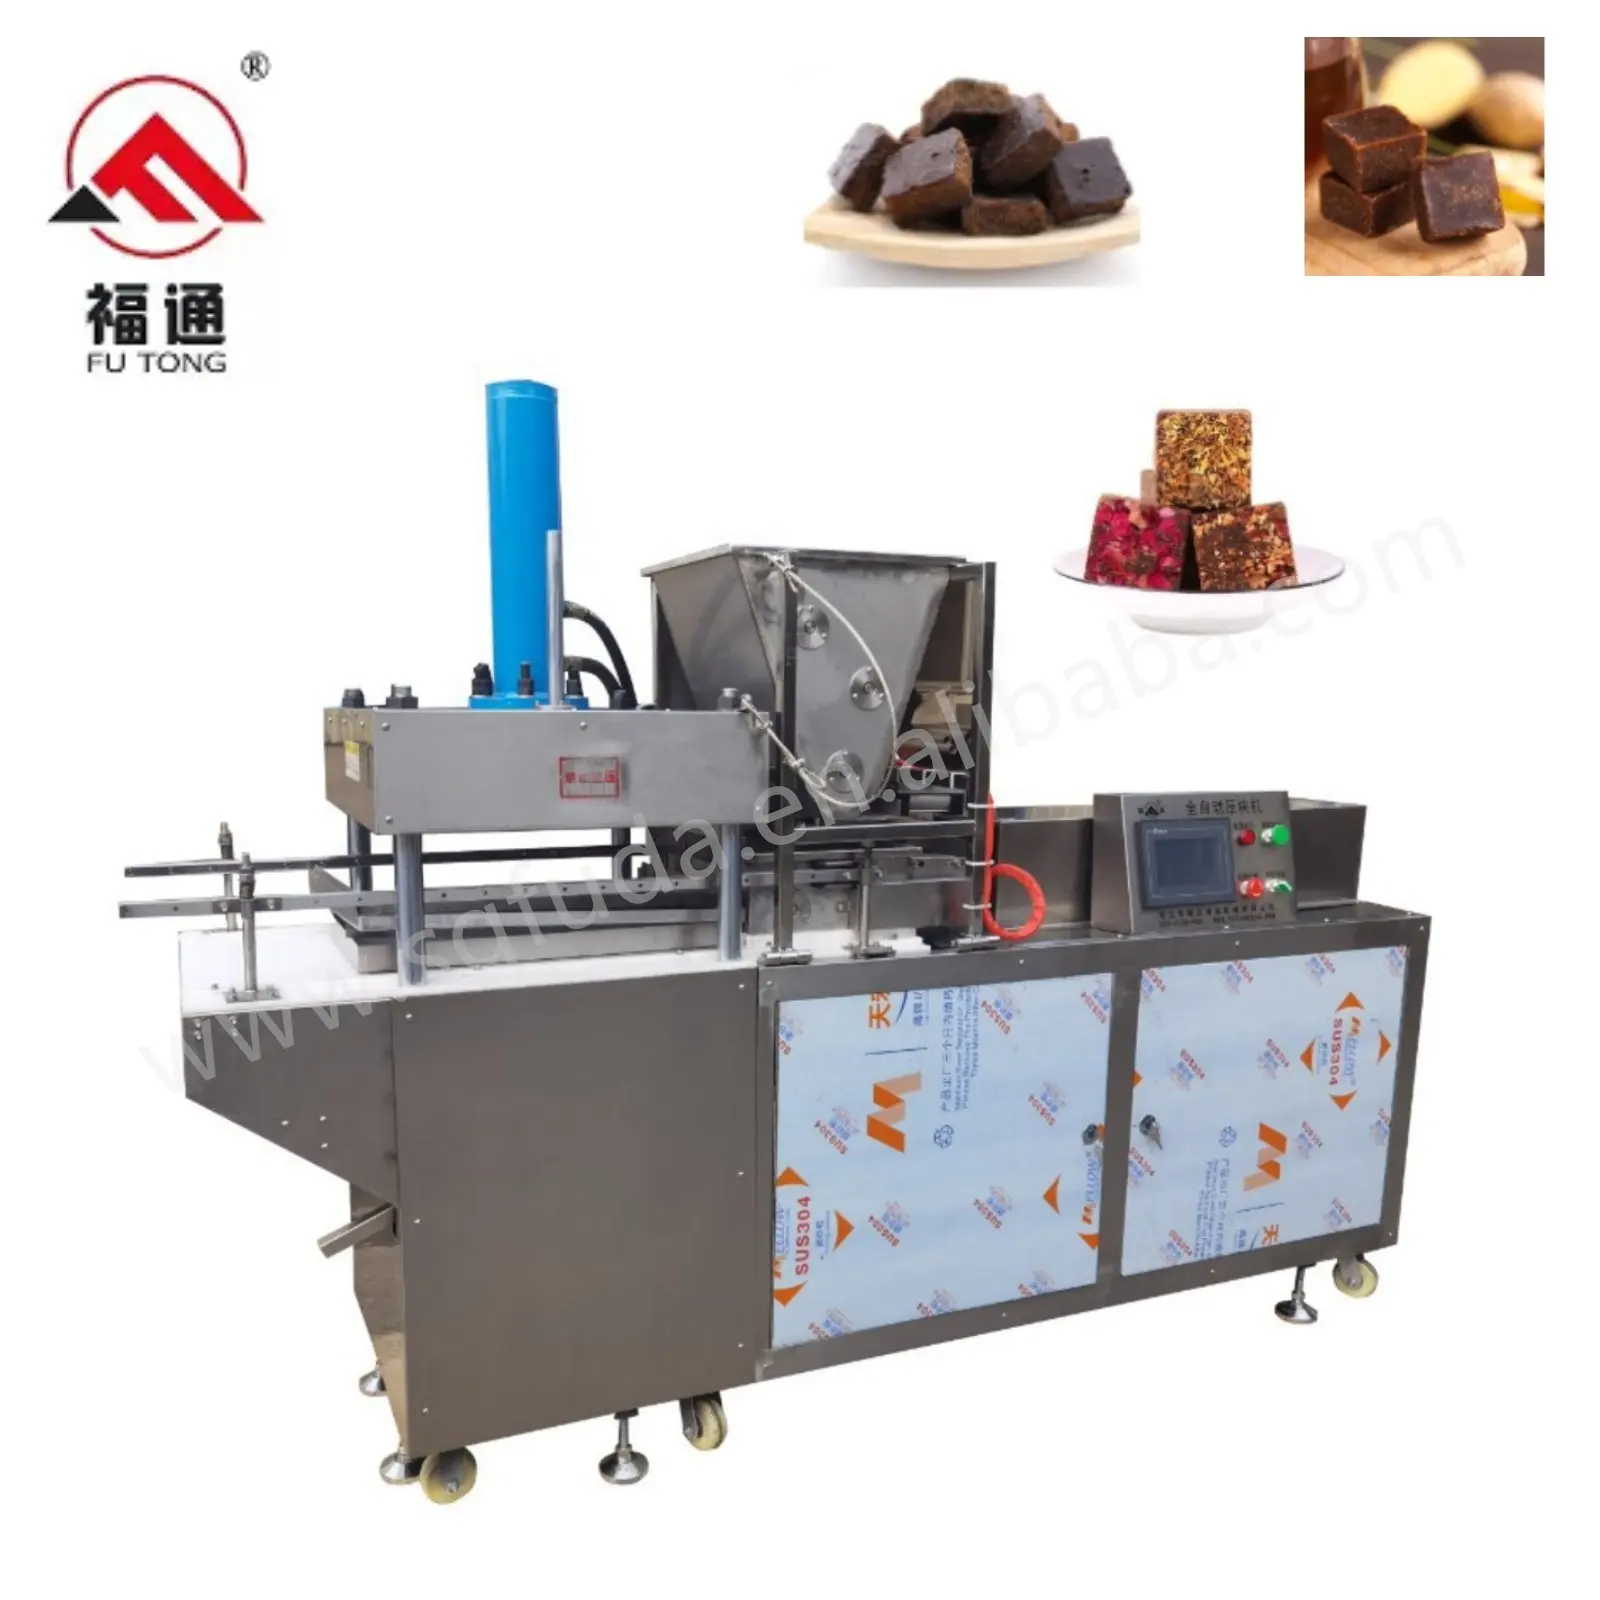 चीनी बनाने के लिए उच्च गुणवत्ता वाली ब्राउन शुगर टी क्यूब्स मशीन क्रिस्टल व्हाइट शुगर फैक्ट्री सप्लाई